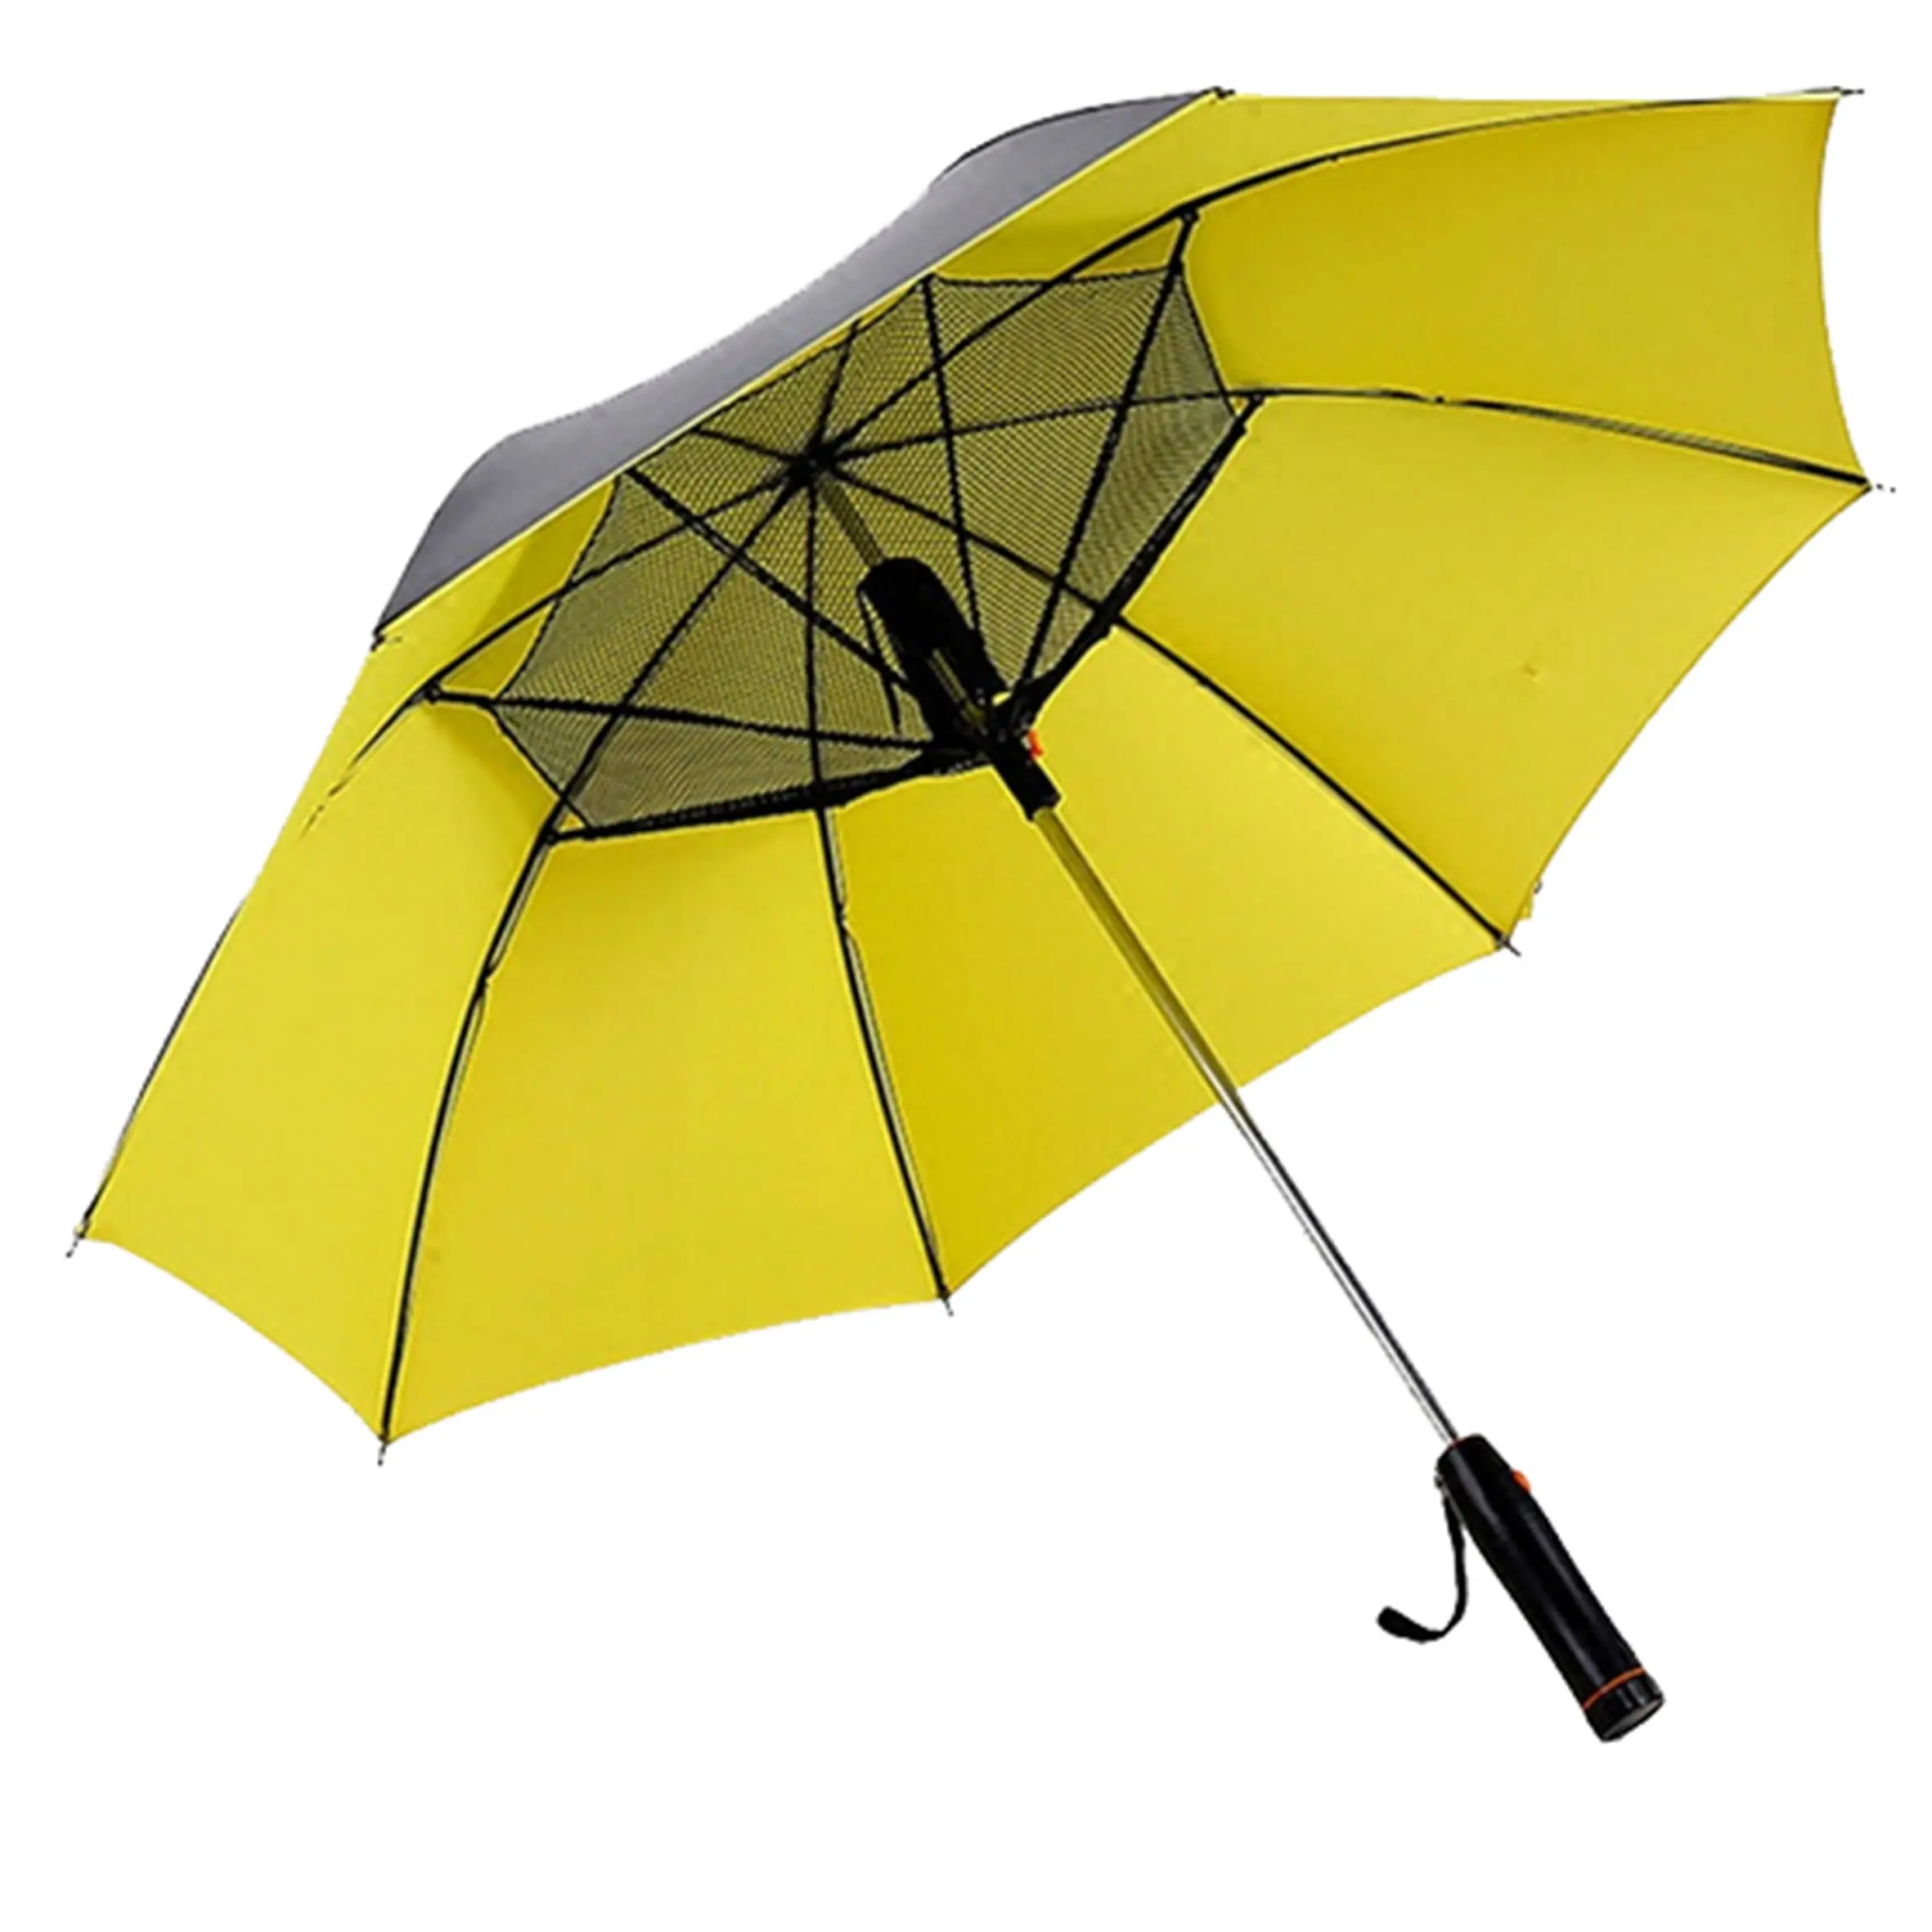 Competitive price ChinaManufacture outdoor Umbrellas fishing,the Umbrellas grip golf doble vented golf Umbrellas/